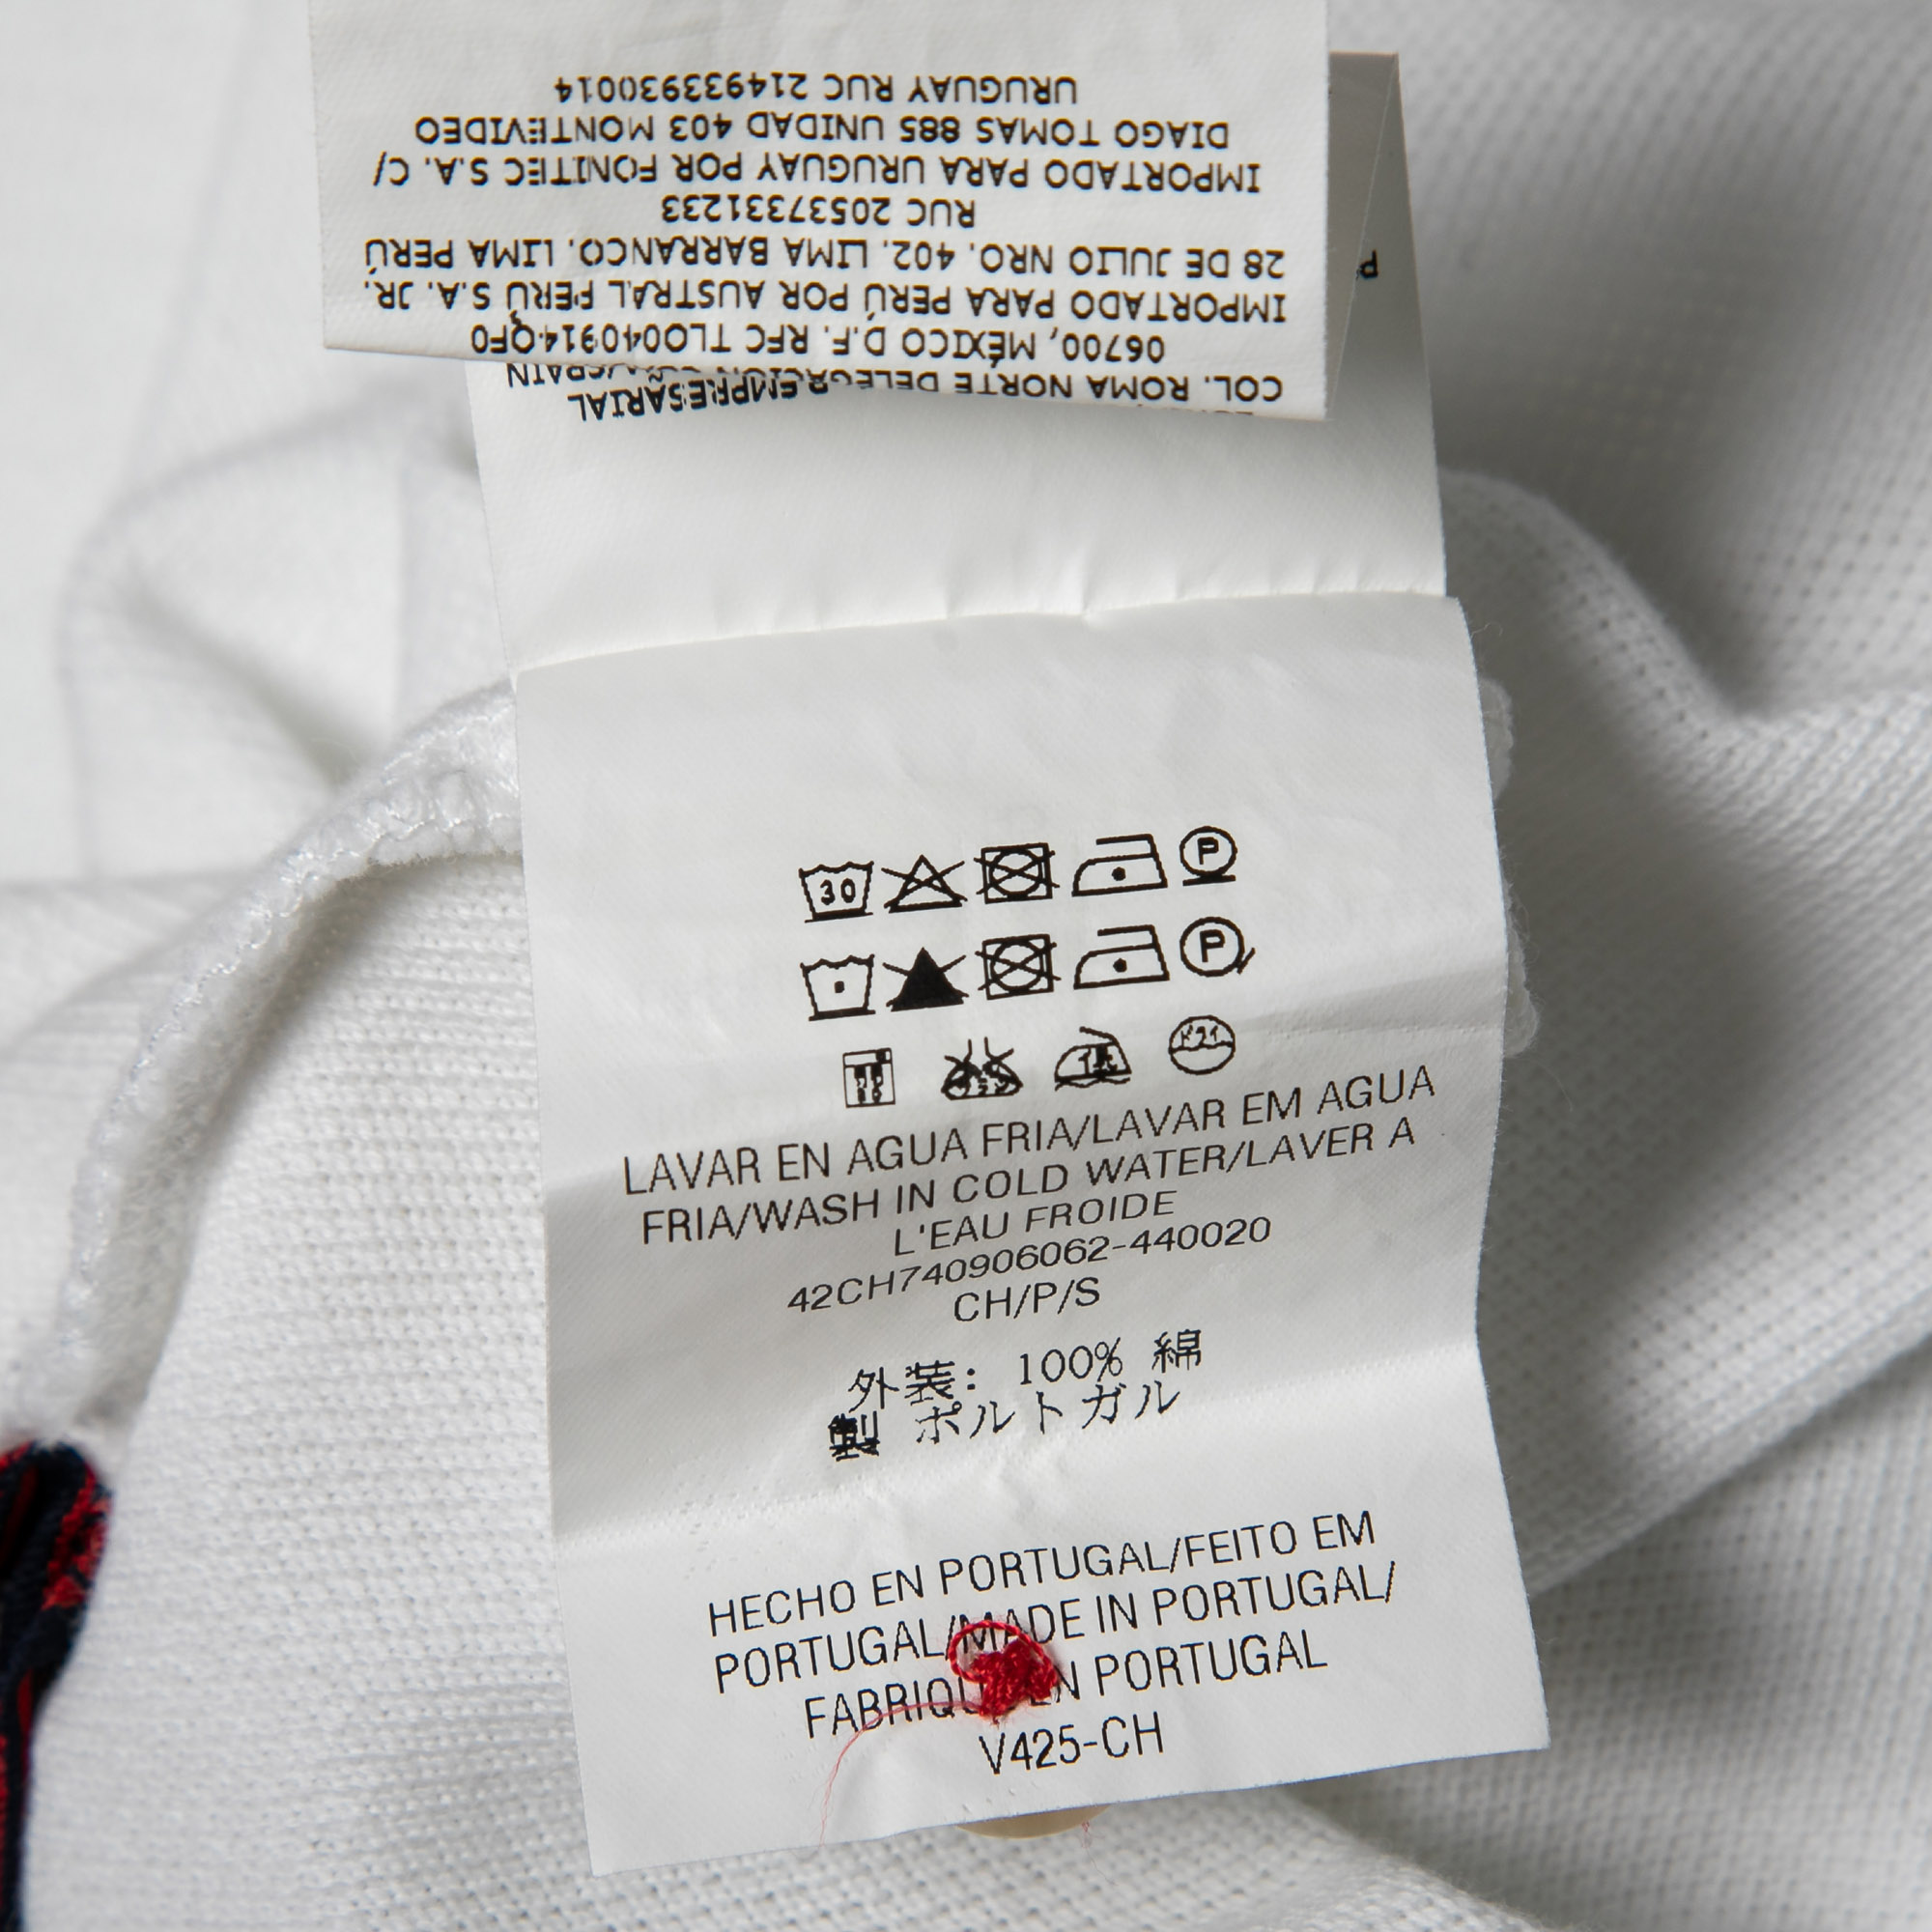 CH Carolina Herrera White Cotton Pique Short Sleeve Polo T-Shirt S